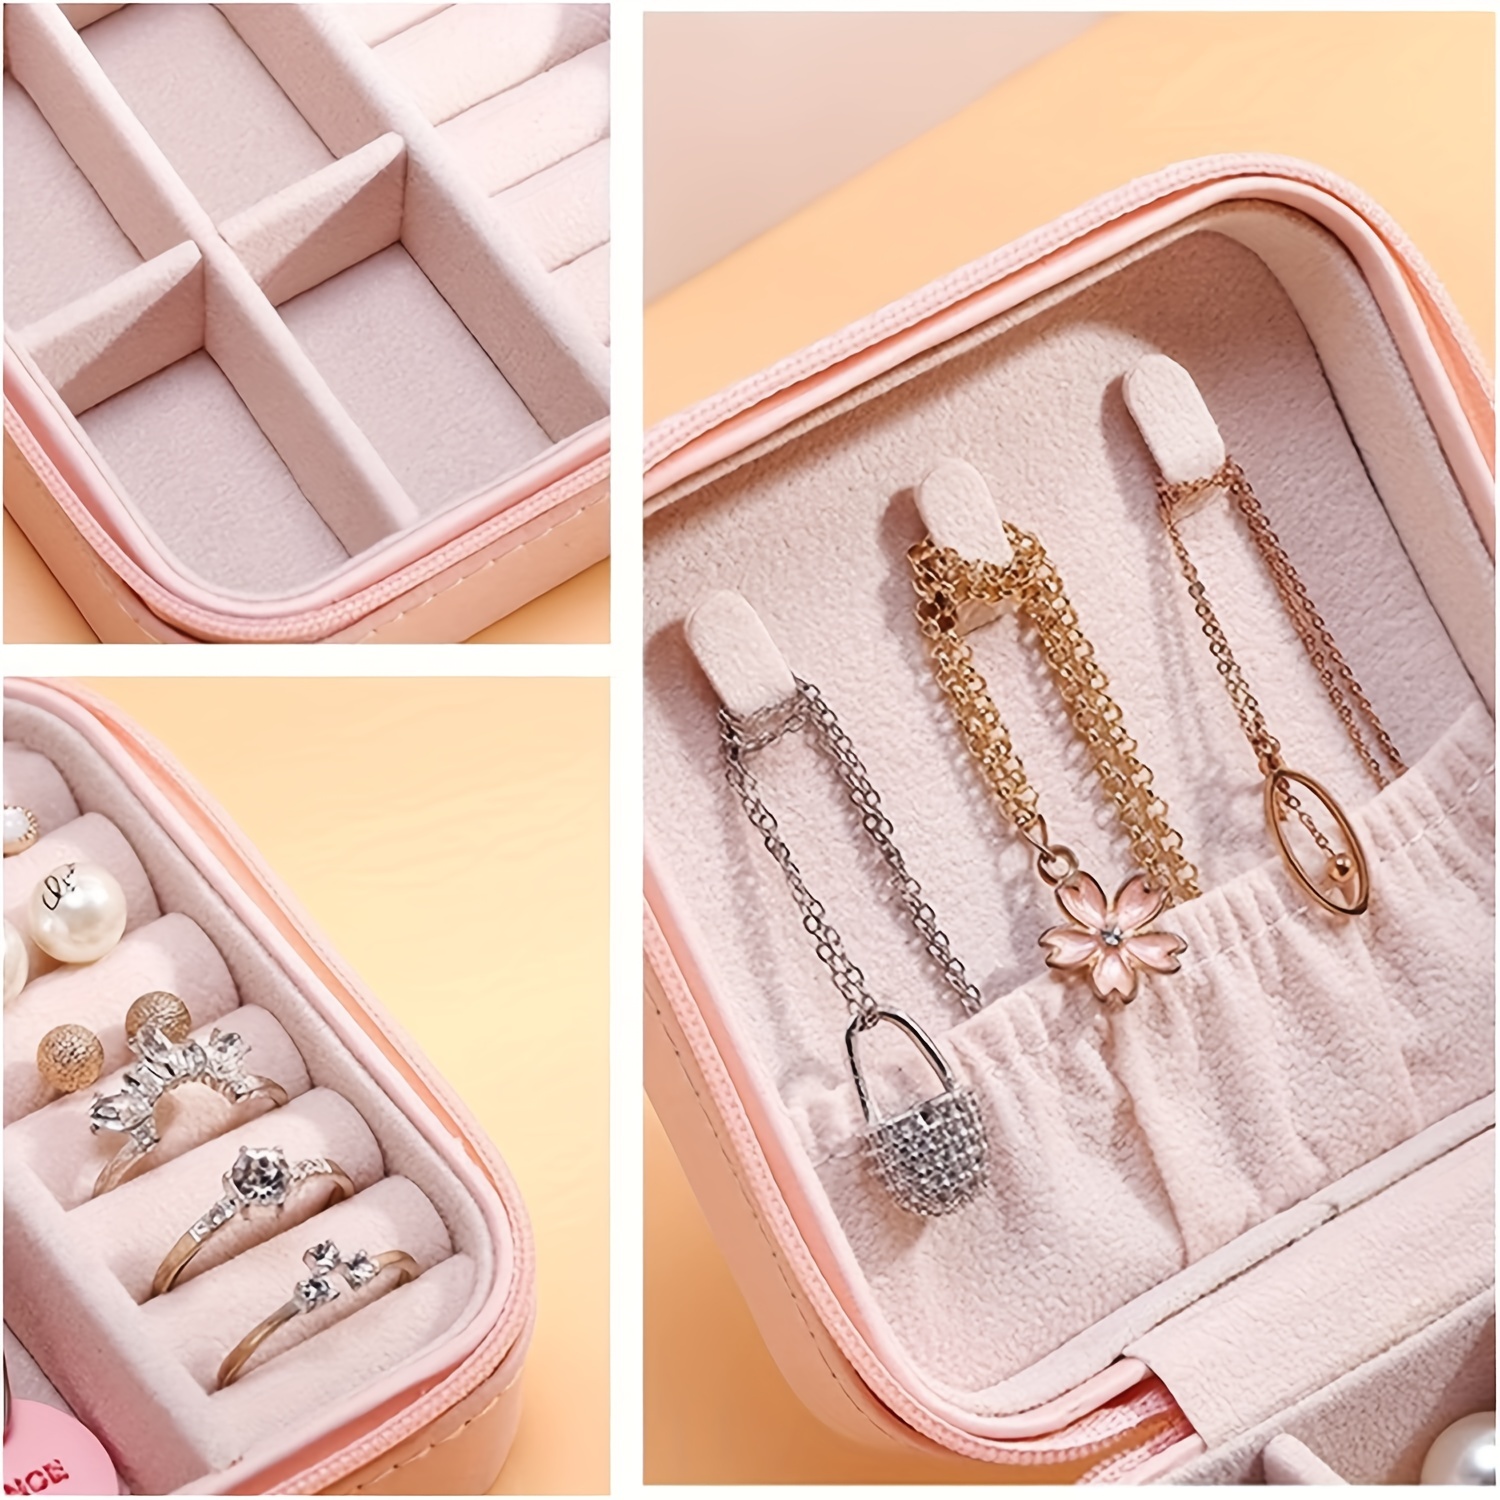 Storage & Organization, Mini Portable Travel Jewelry Box Small Portable  Travel Jewelry Case